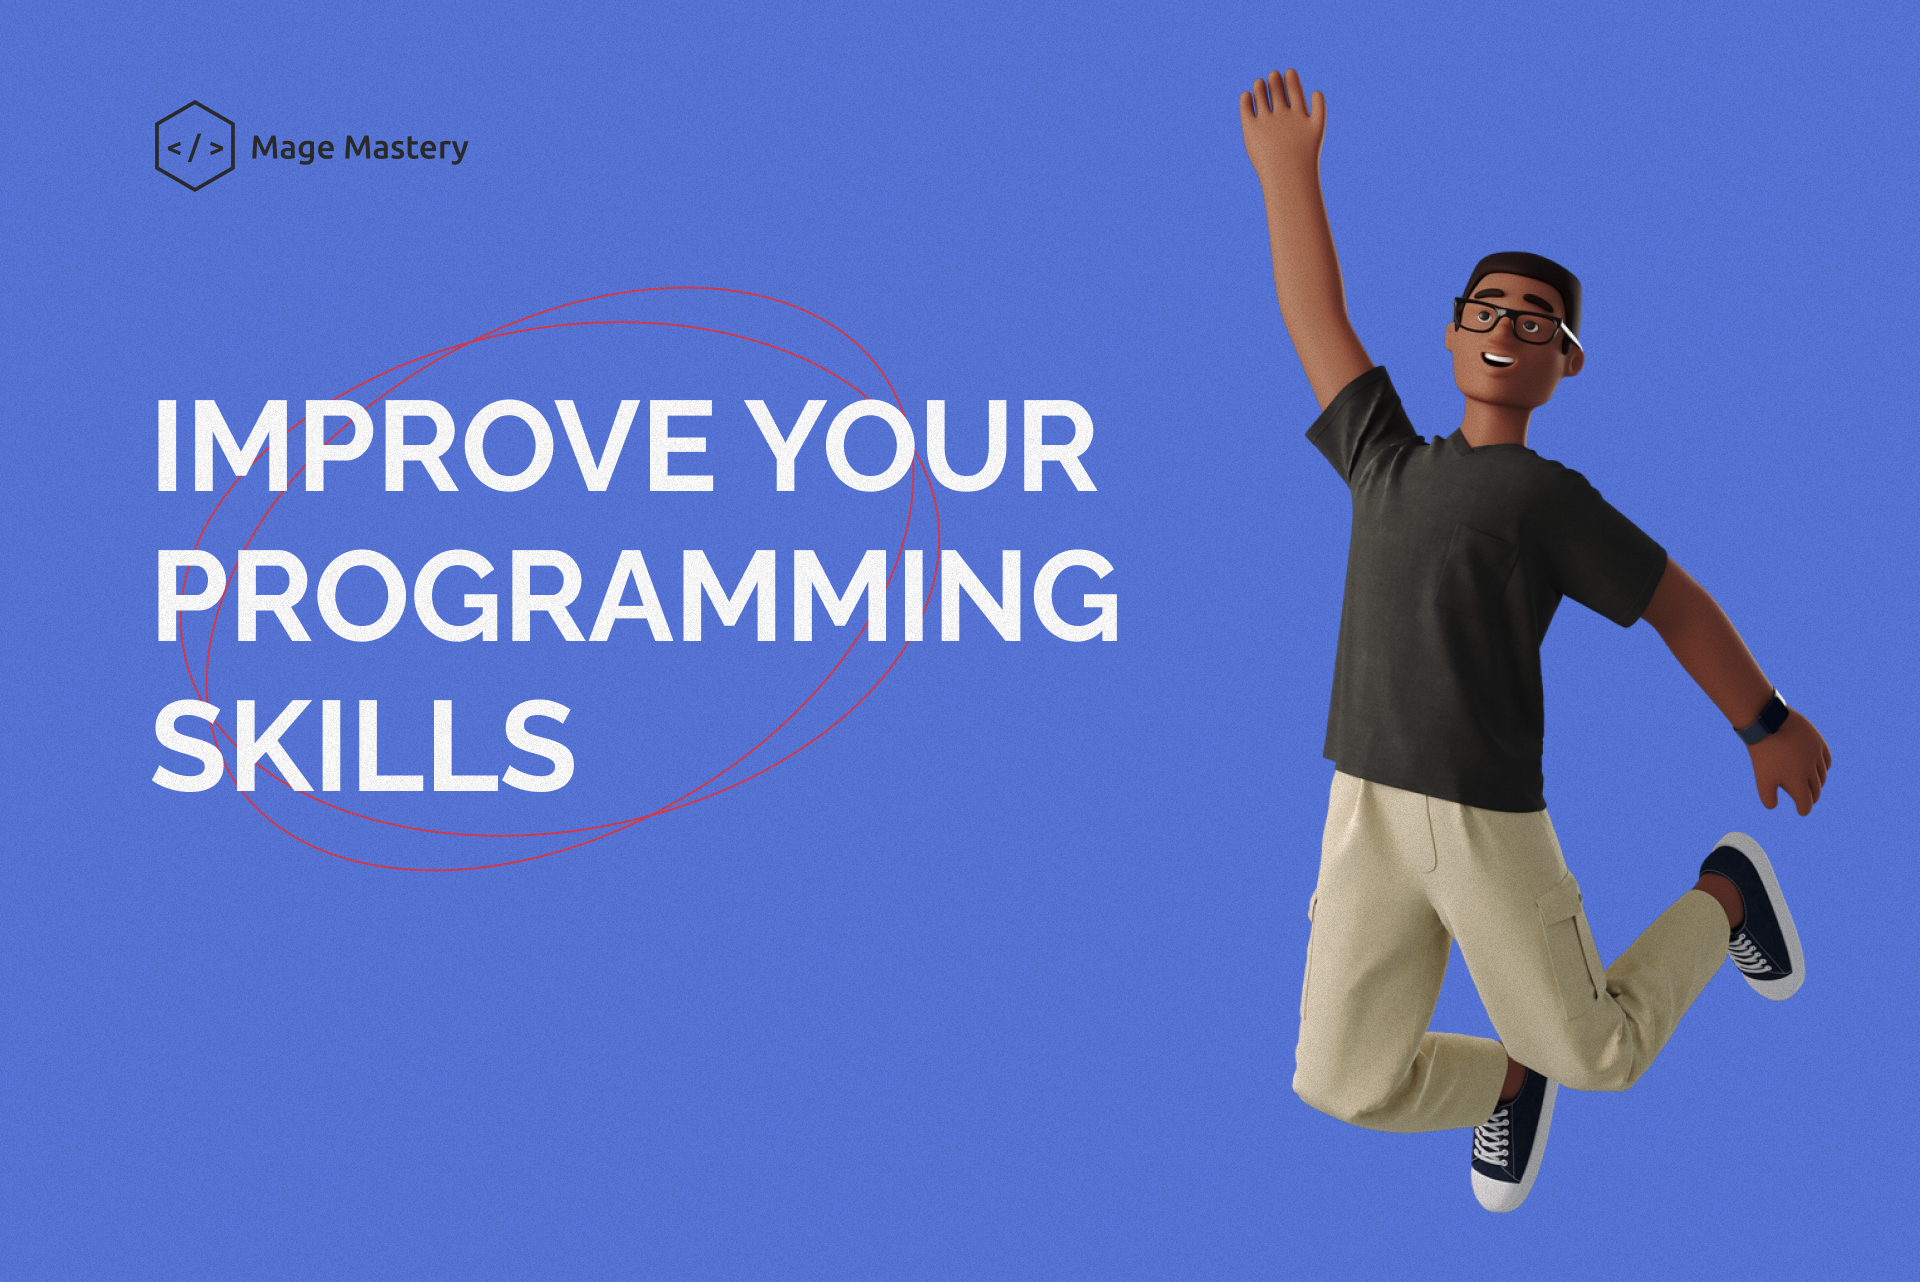 6 ways to improve your programming skills